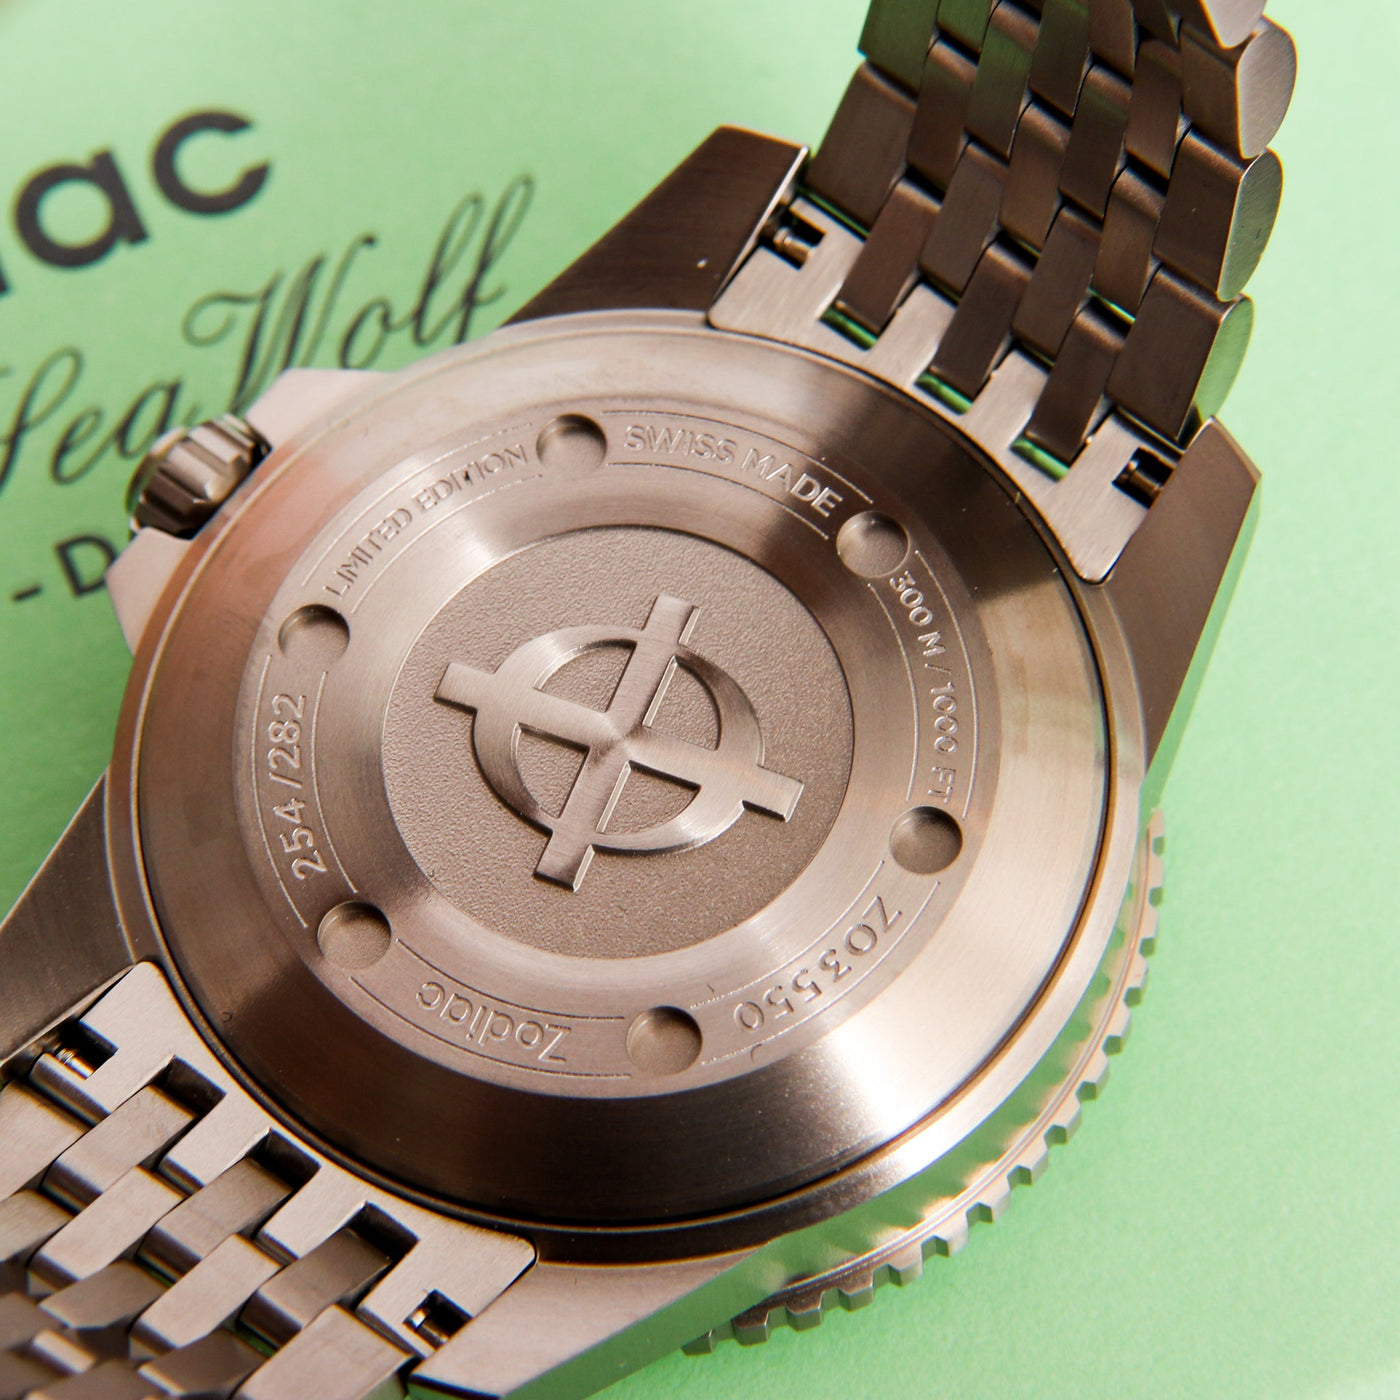 Zodiac Super Sea Wolf Pro Diver Titanium Limited Edition Watch Back Of Watchface